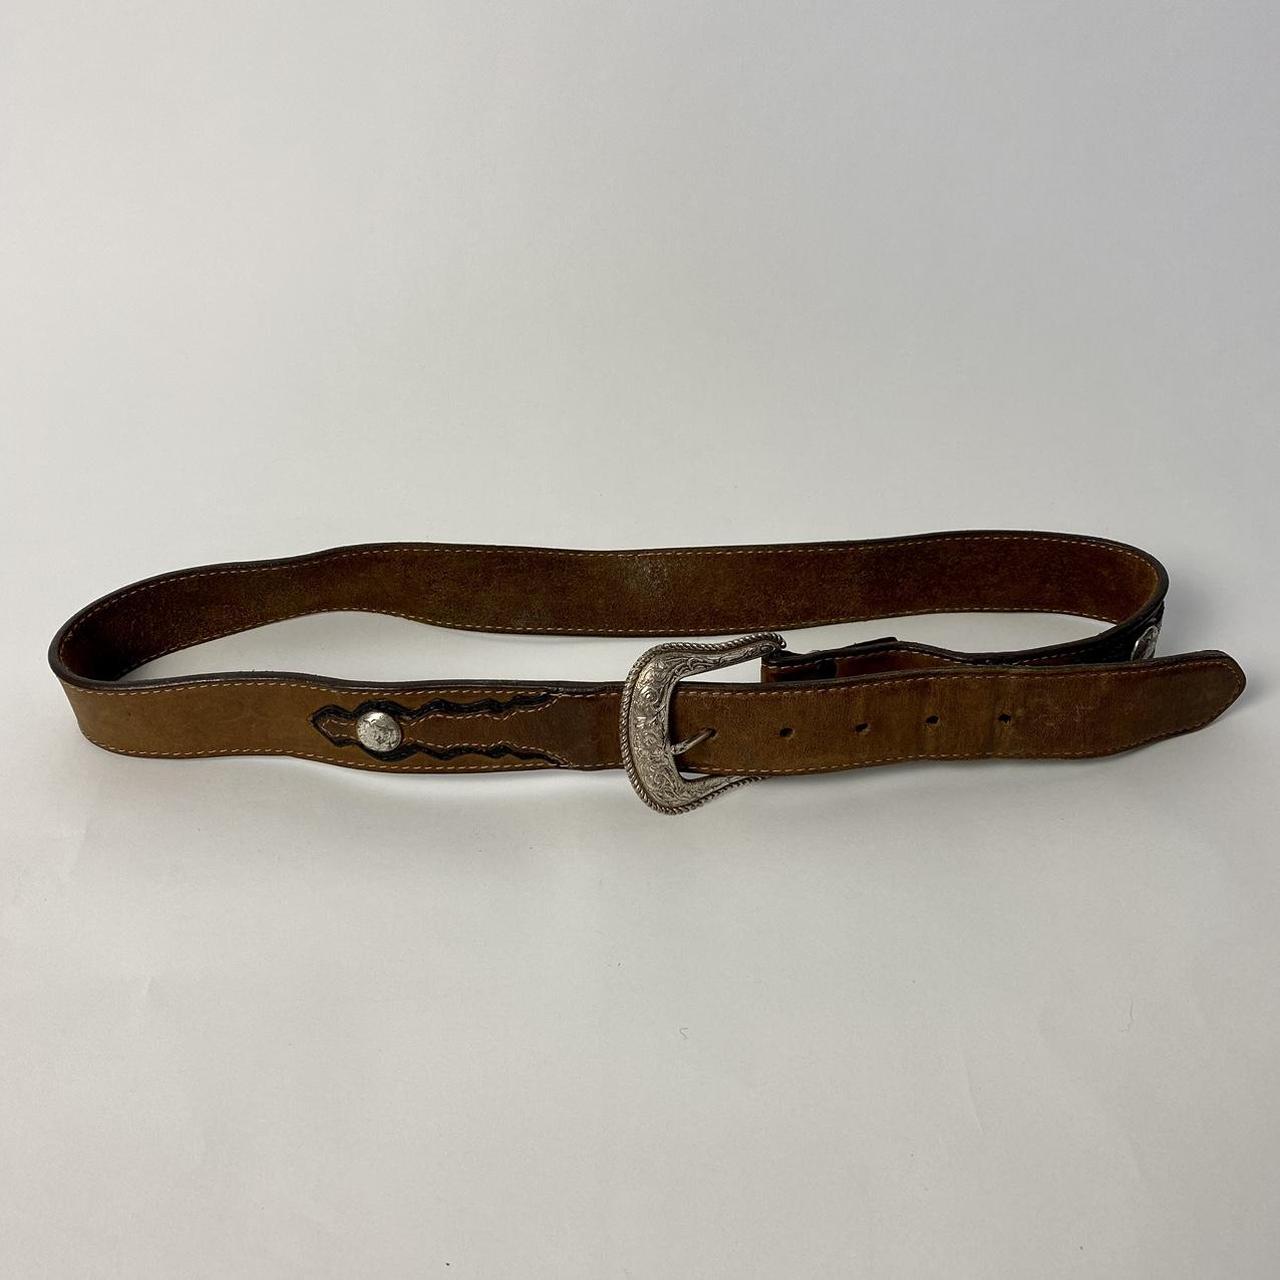 Vintage brown leather belt. Great condition. Free... - Depop